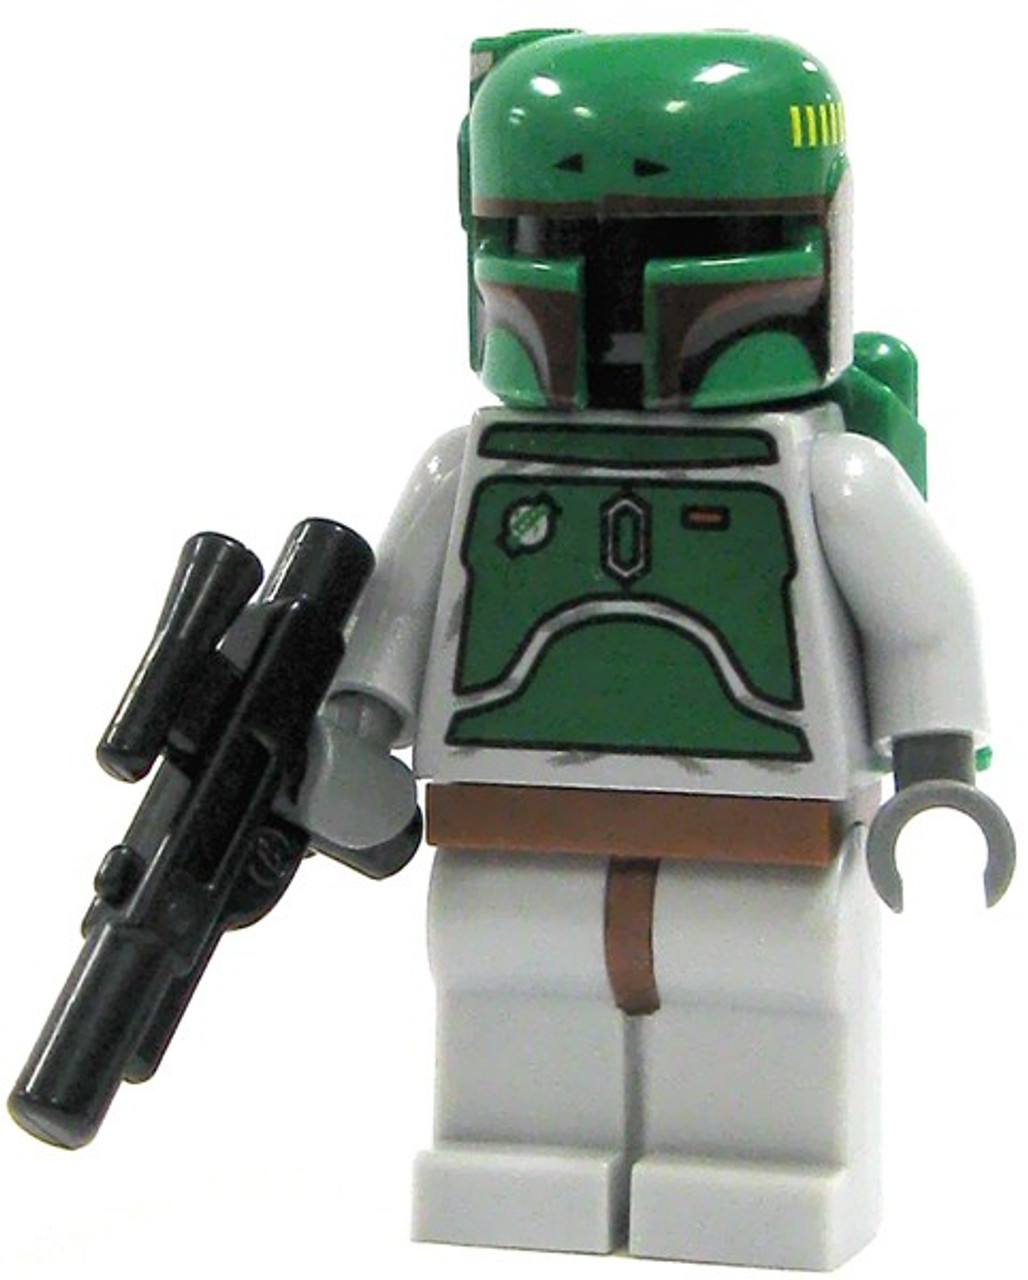 Download LEGO Star Wars Loose Boba Fett Minifigure Gray Loose - ToyWiz